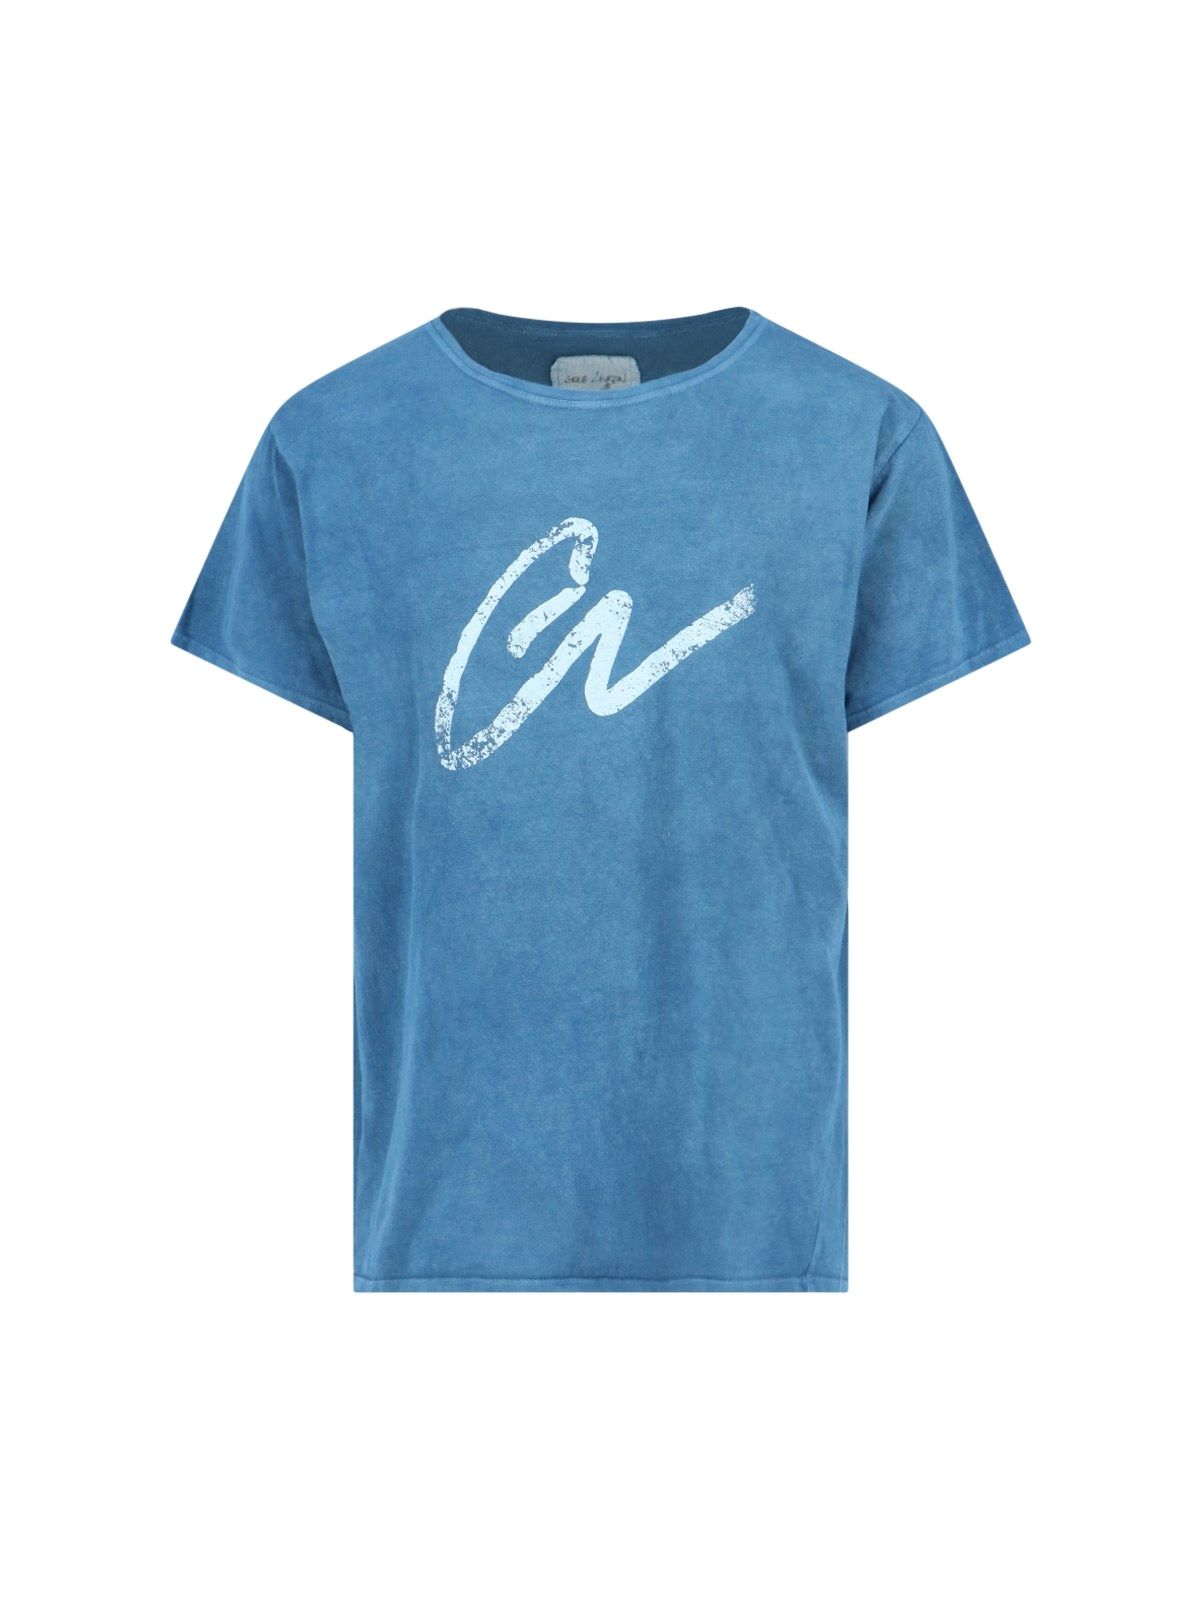 T-shirt stampa "GL"